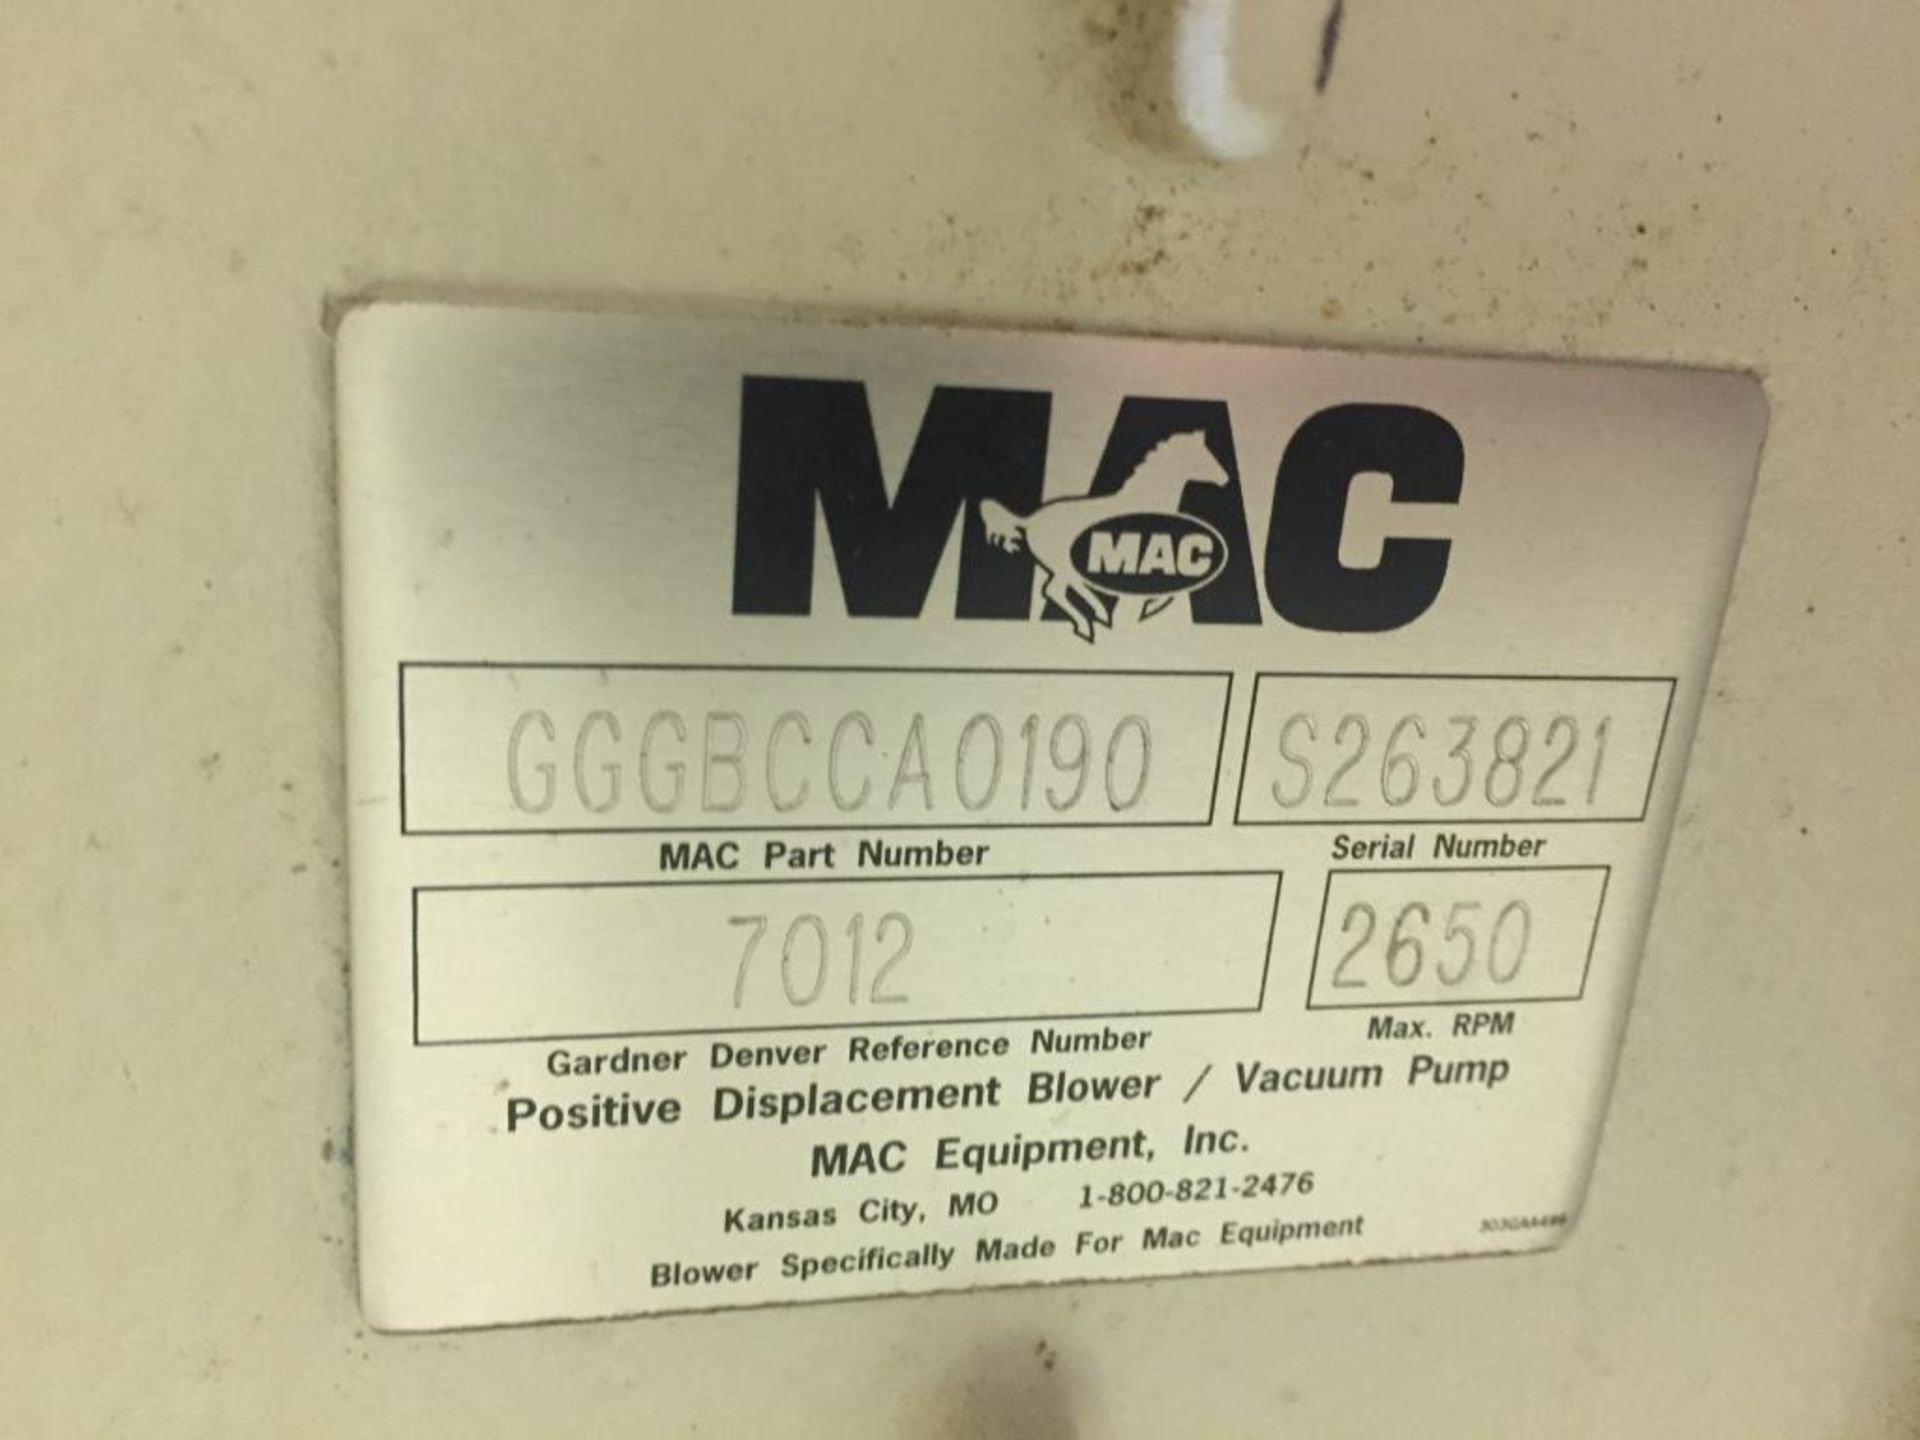 MAC Blower Package Model GGGBCCA0190 S/N S263821 GD REF # 7012 MAX RPM 2650 50HP - Image 3 of 5